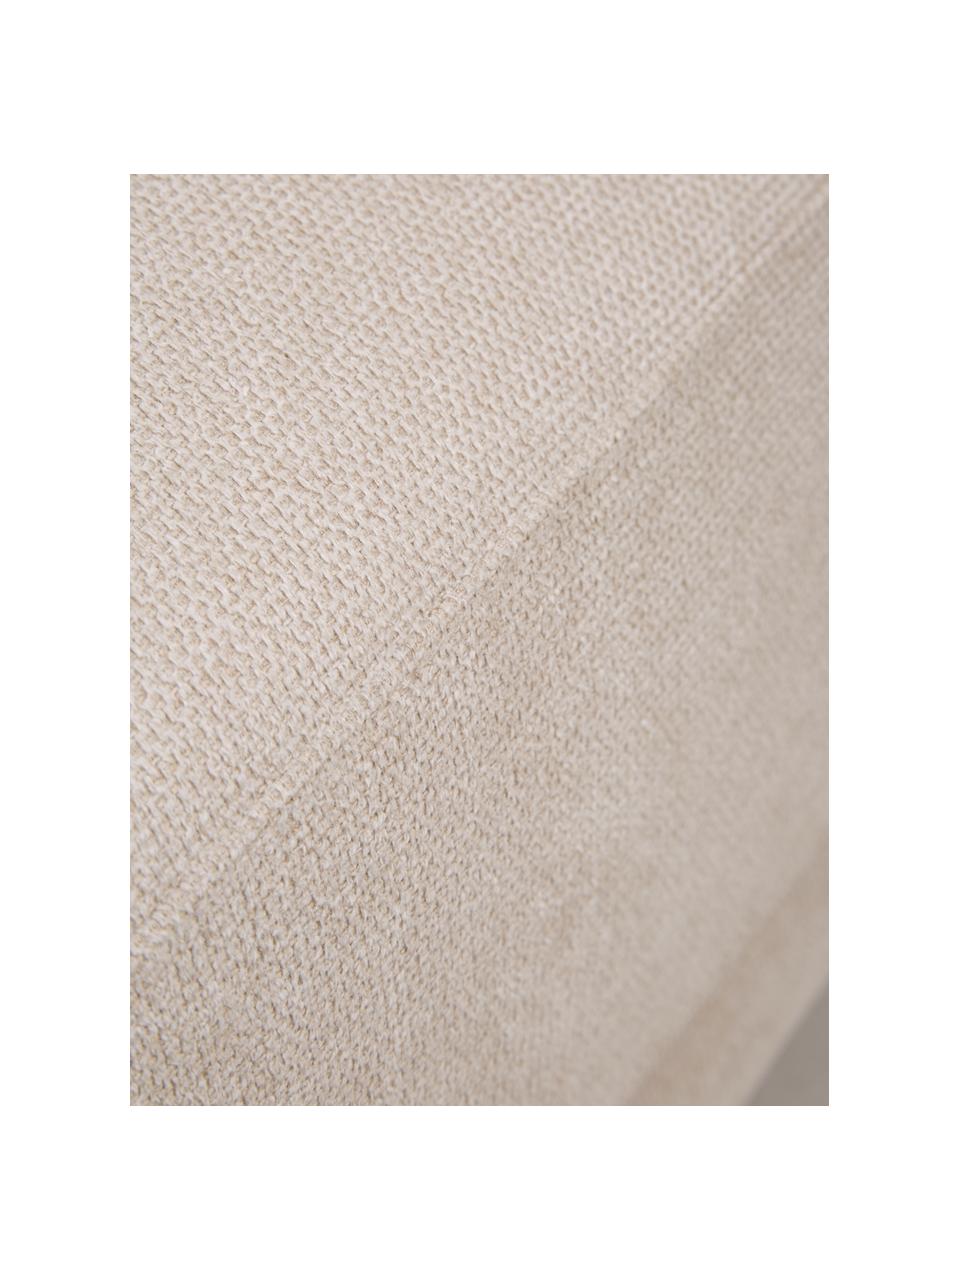 Sofa-Hocker Jasmin in Beige, Bezug: 85% Polyester, 15% Nylon , Gestell: Massives Fichtenholz FSC-, Füße: Kunststoff, Webstoff Beige, 105 x 75 cm